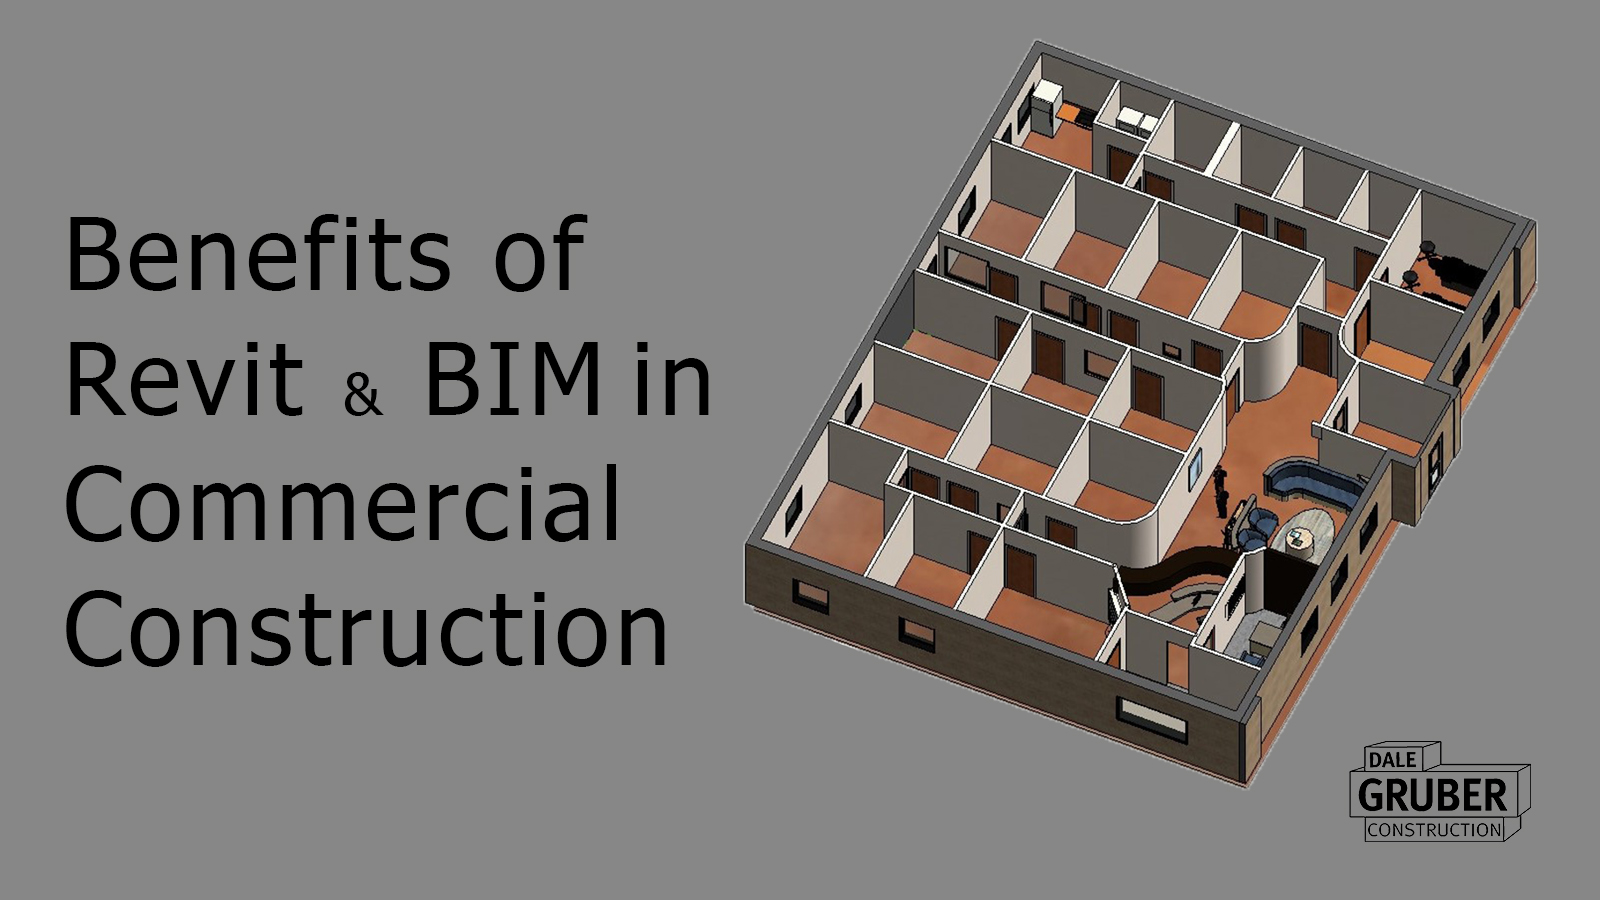 Benefits of Revit & BIM in Construction